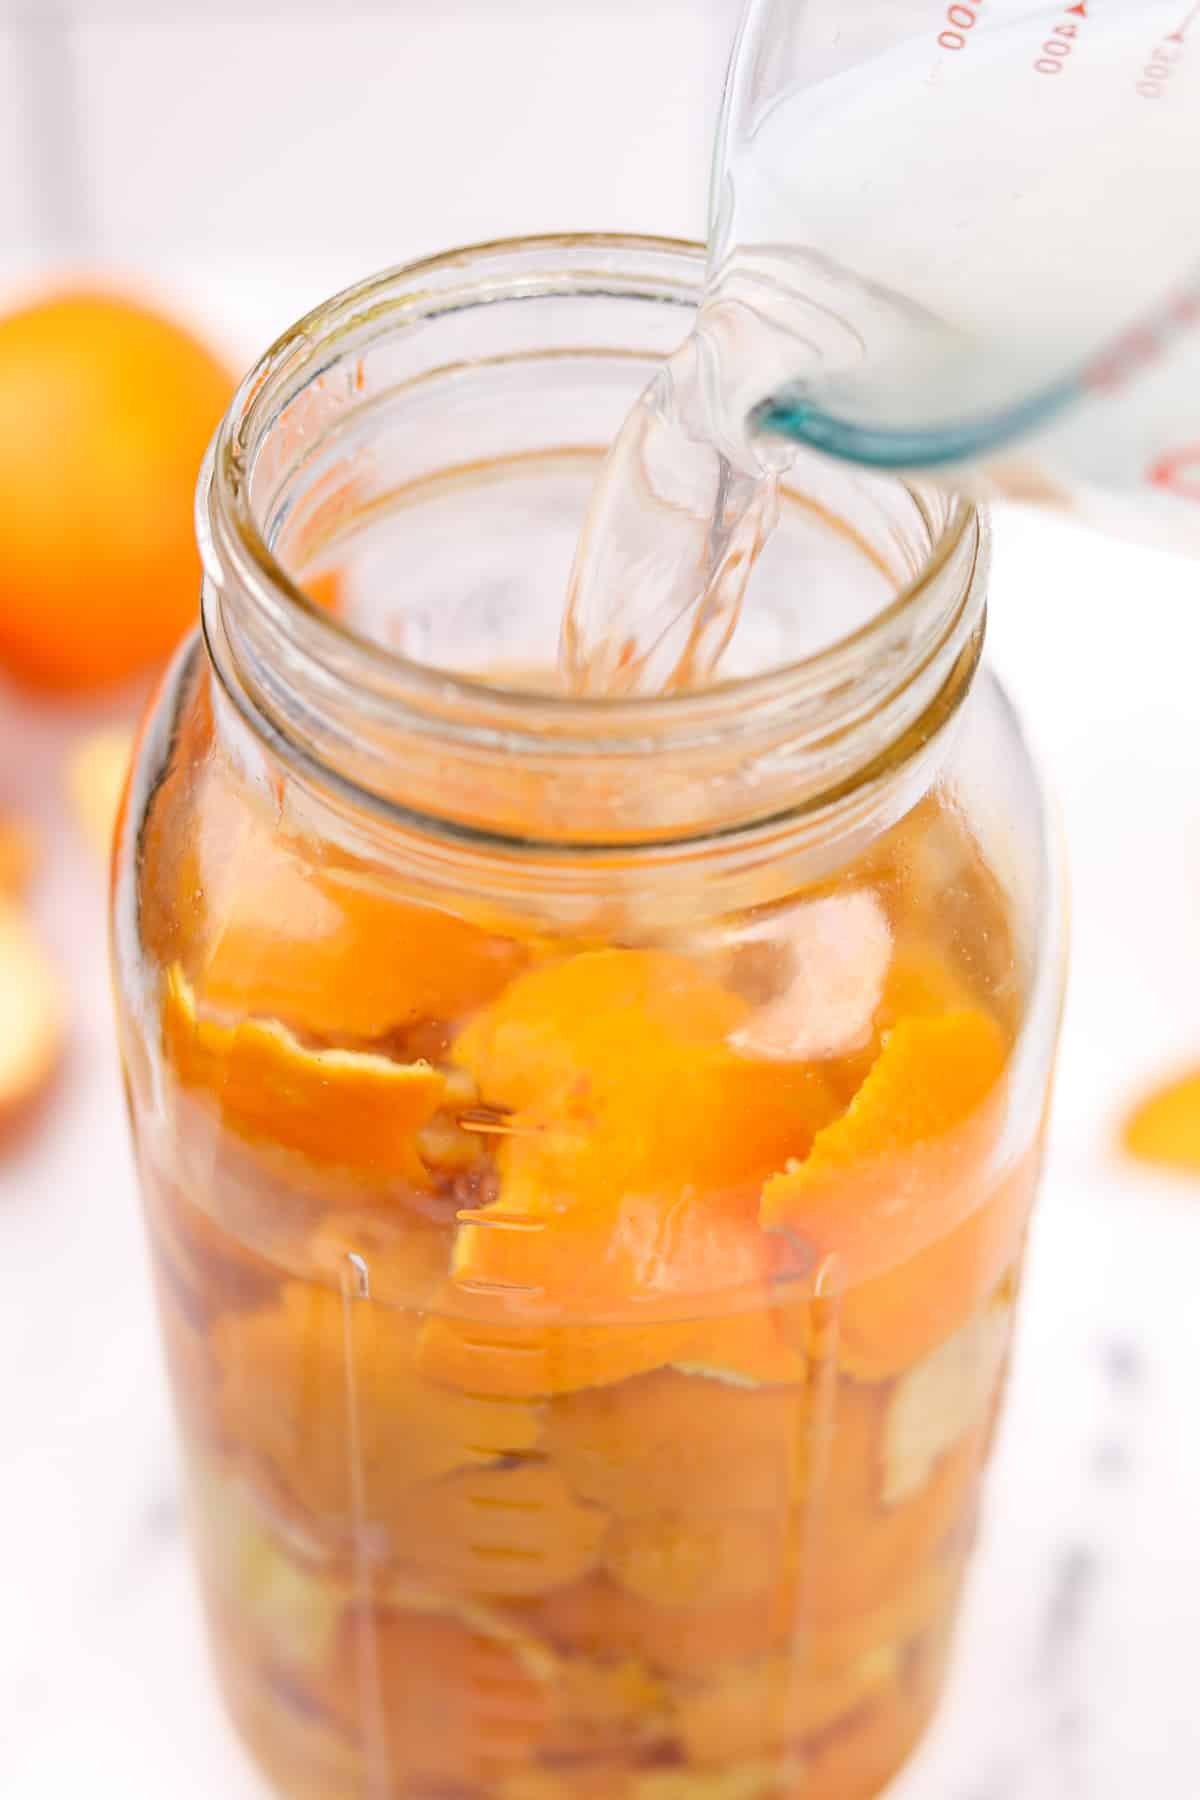 Pouring vinegar into a jar of orange peels.